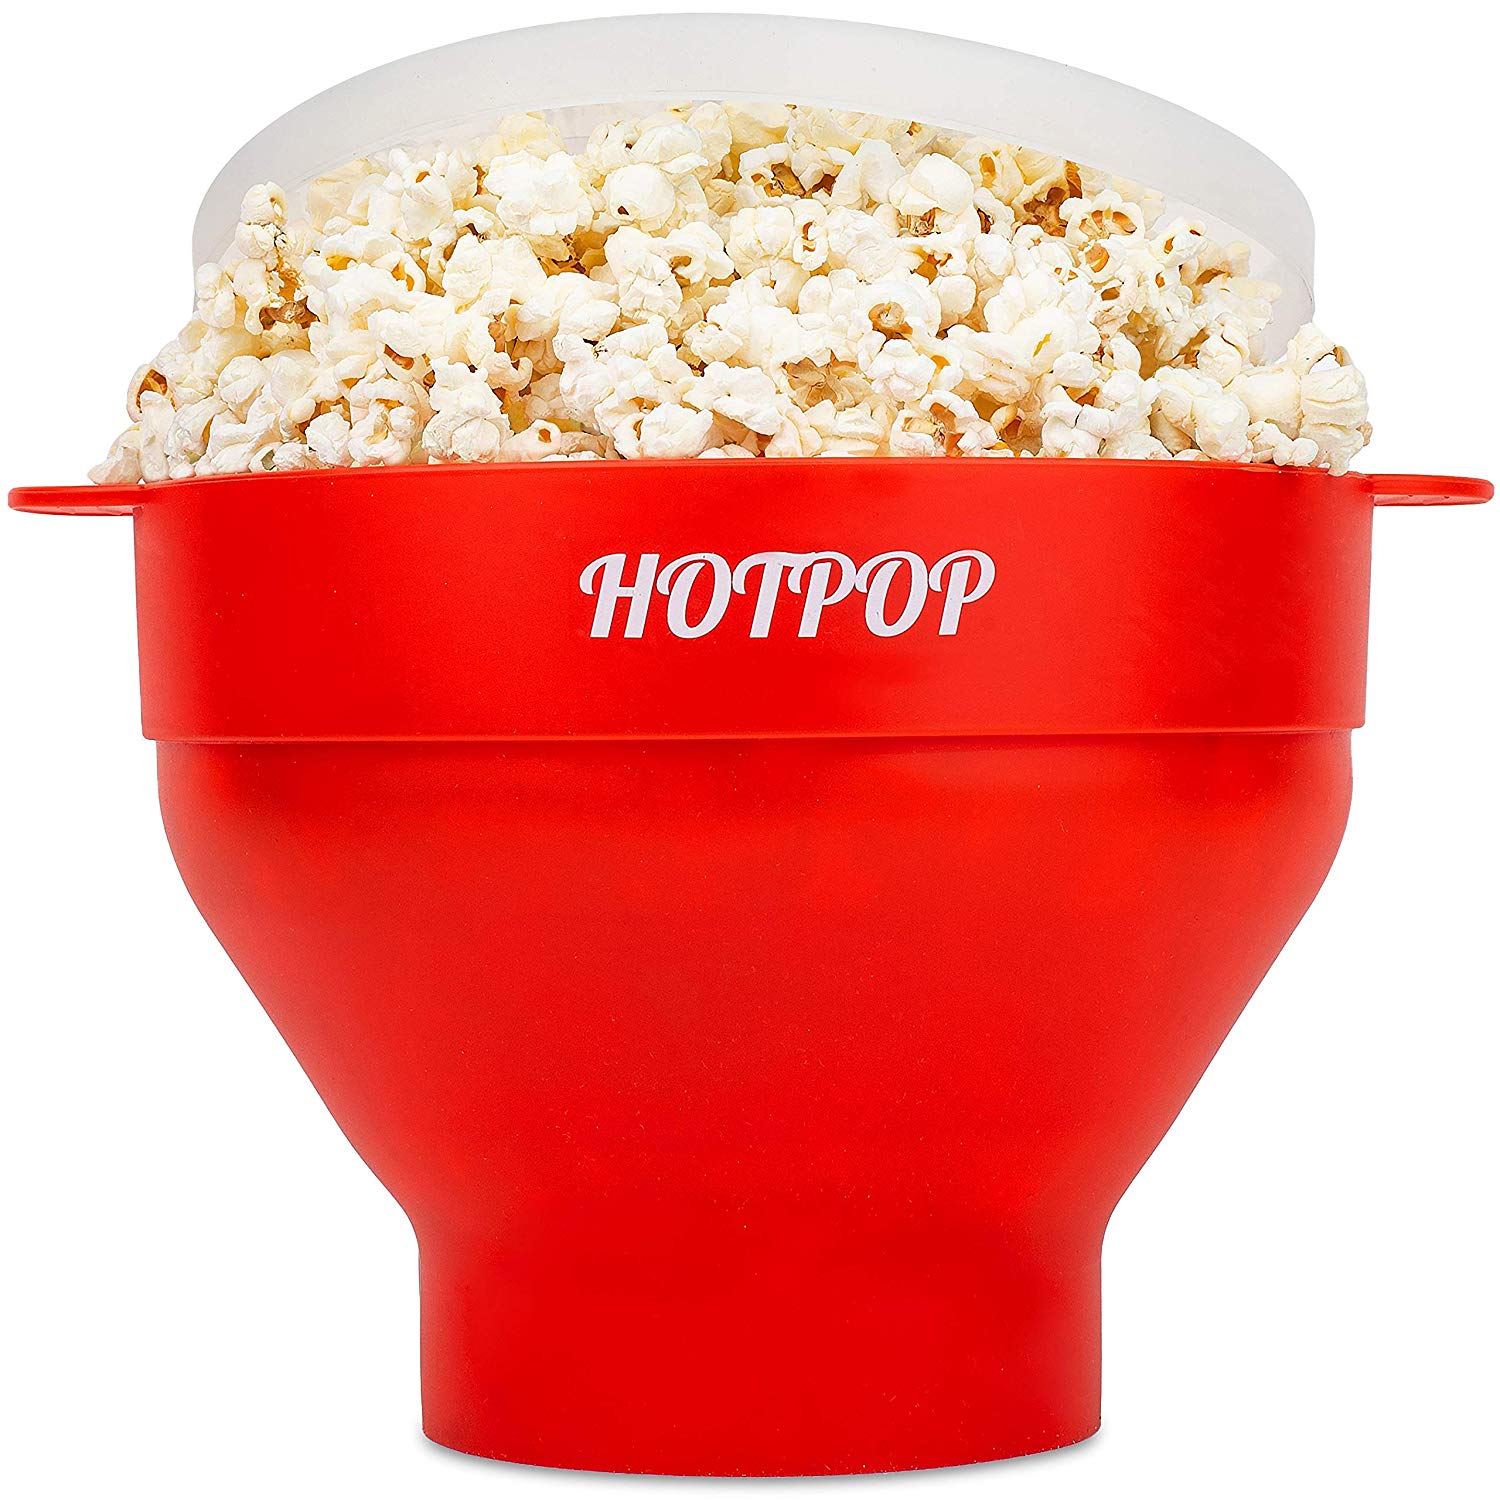 HOTPOP Original Heat-Resistant Microwave Popcorn Maker, 15-Cup